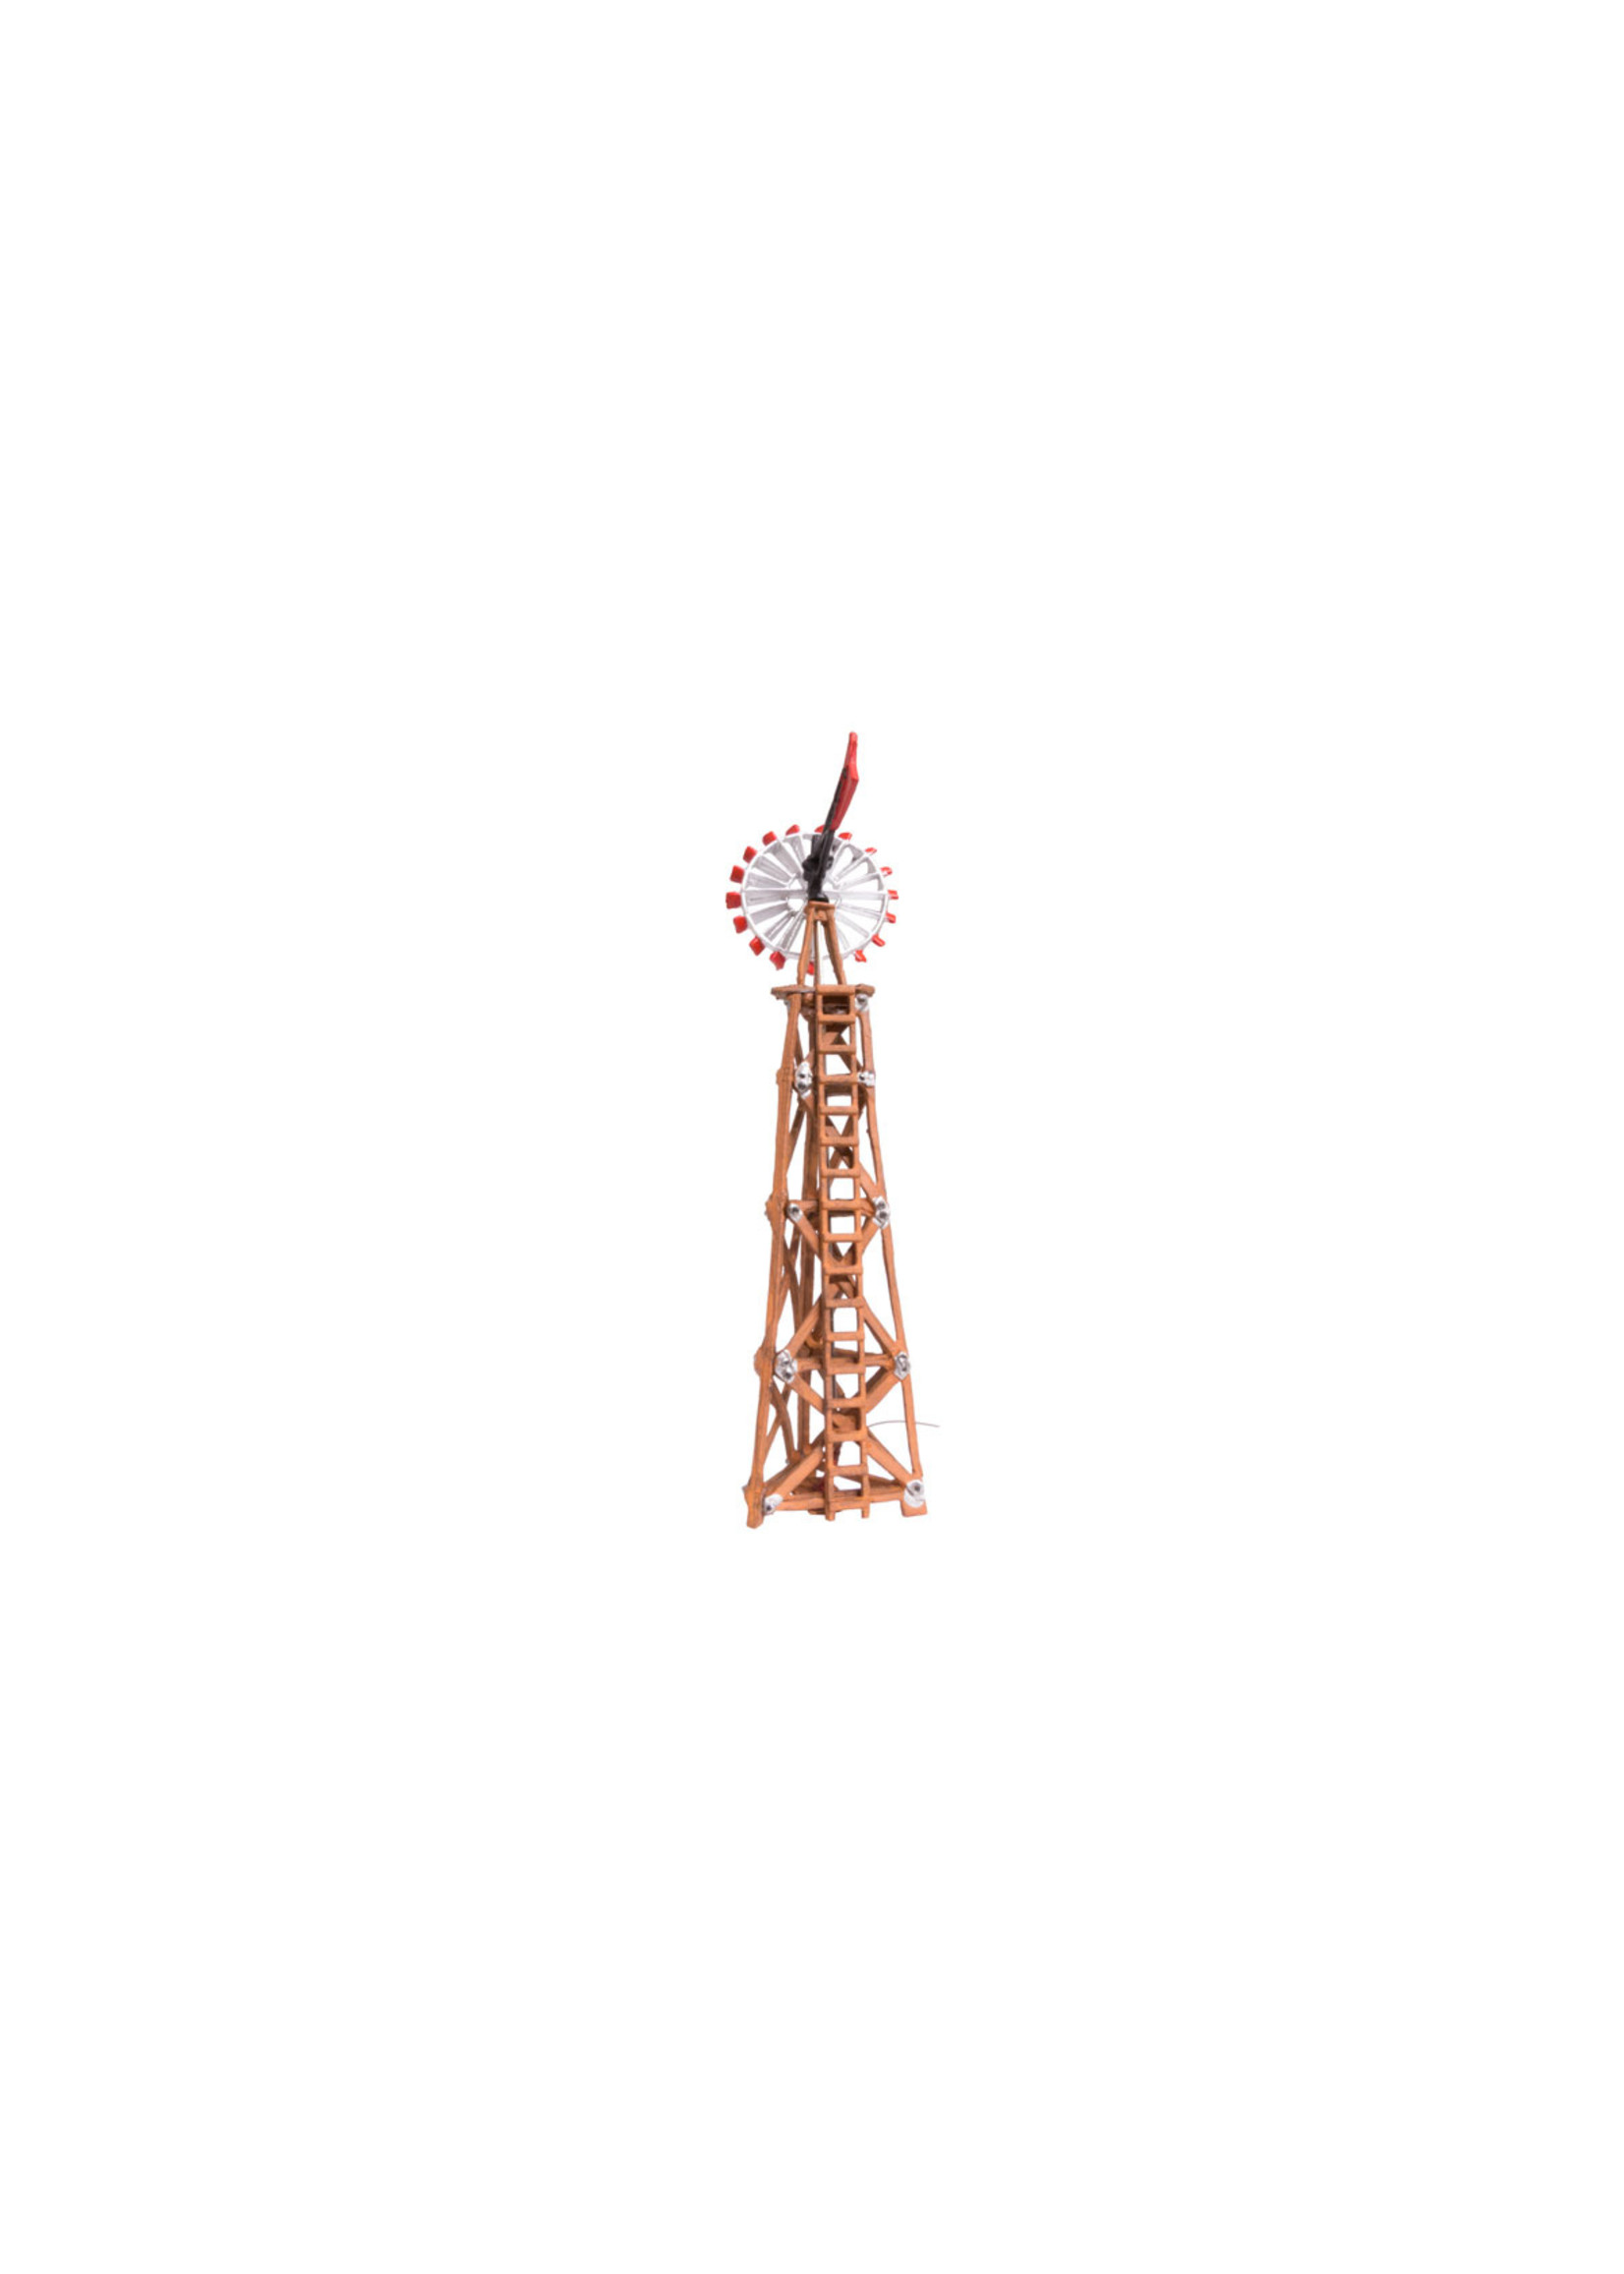 Woodland Scenics BR4937 - N Scale Windmill